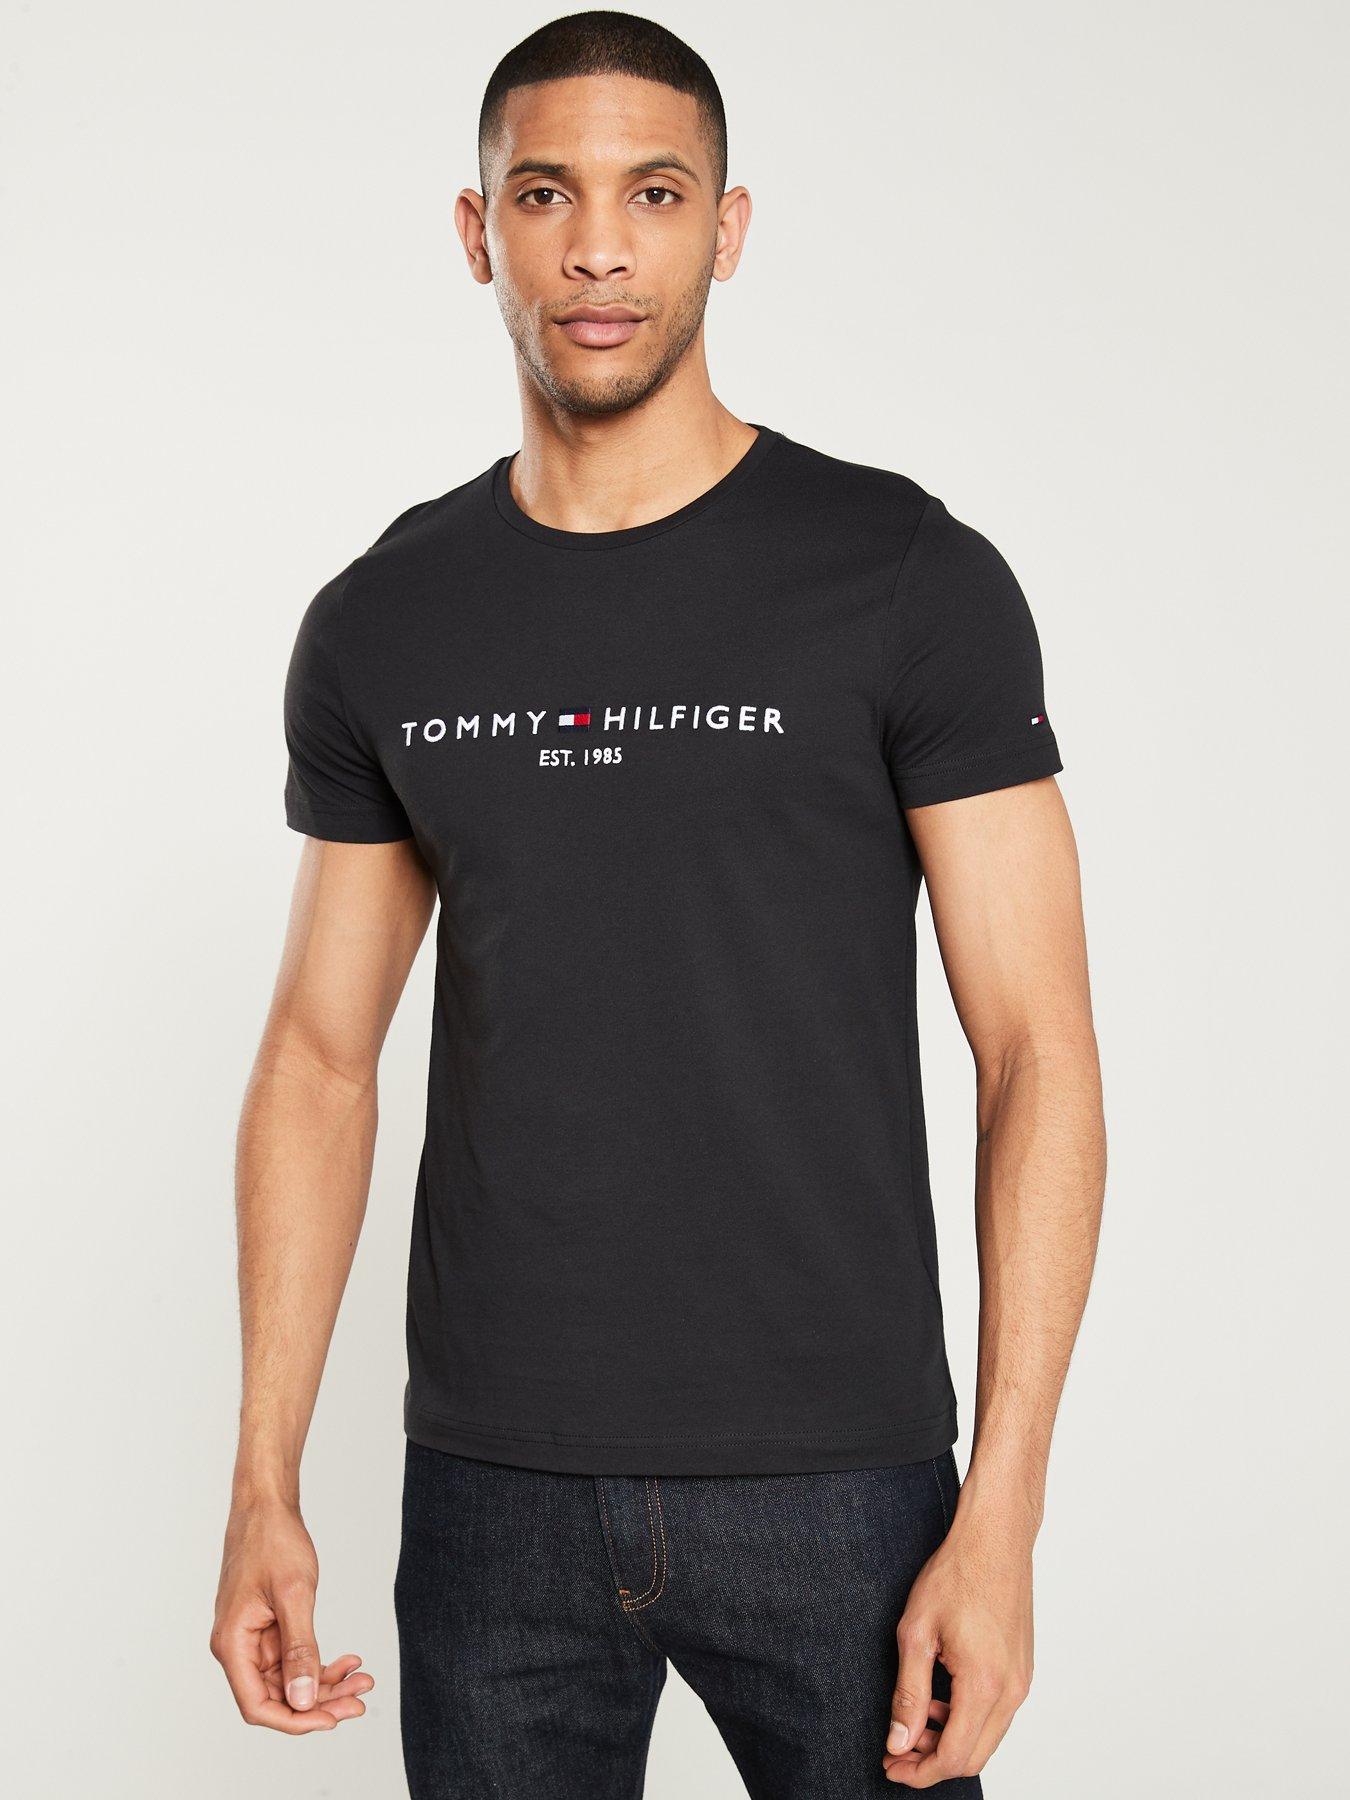 Uheldig At læse Kritik Tommy Hilfiger Tommy Logo T-Shirt - Black | Very Ireland